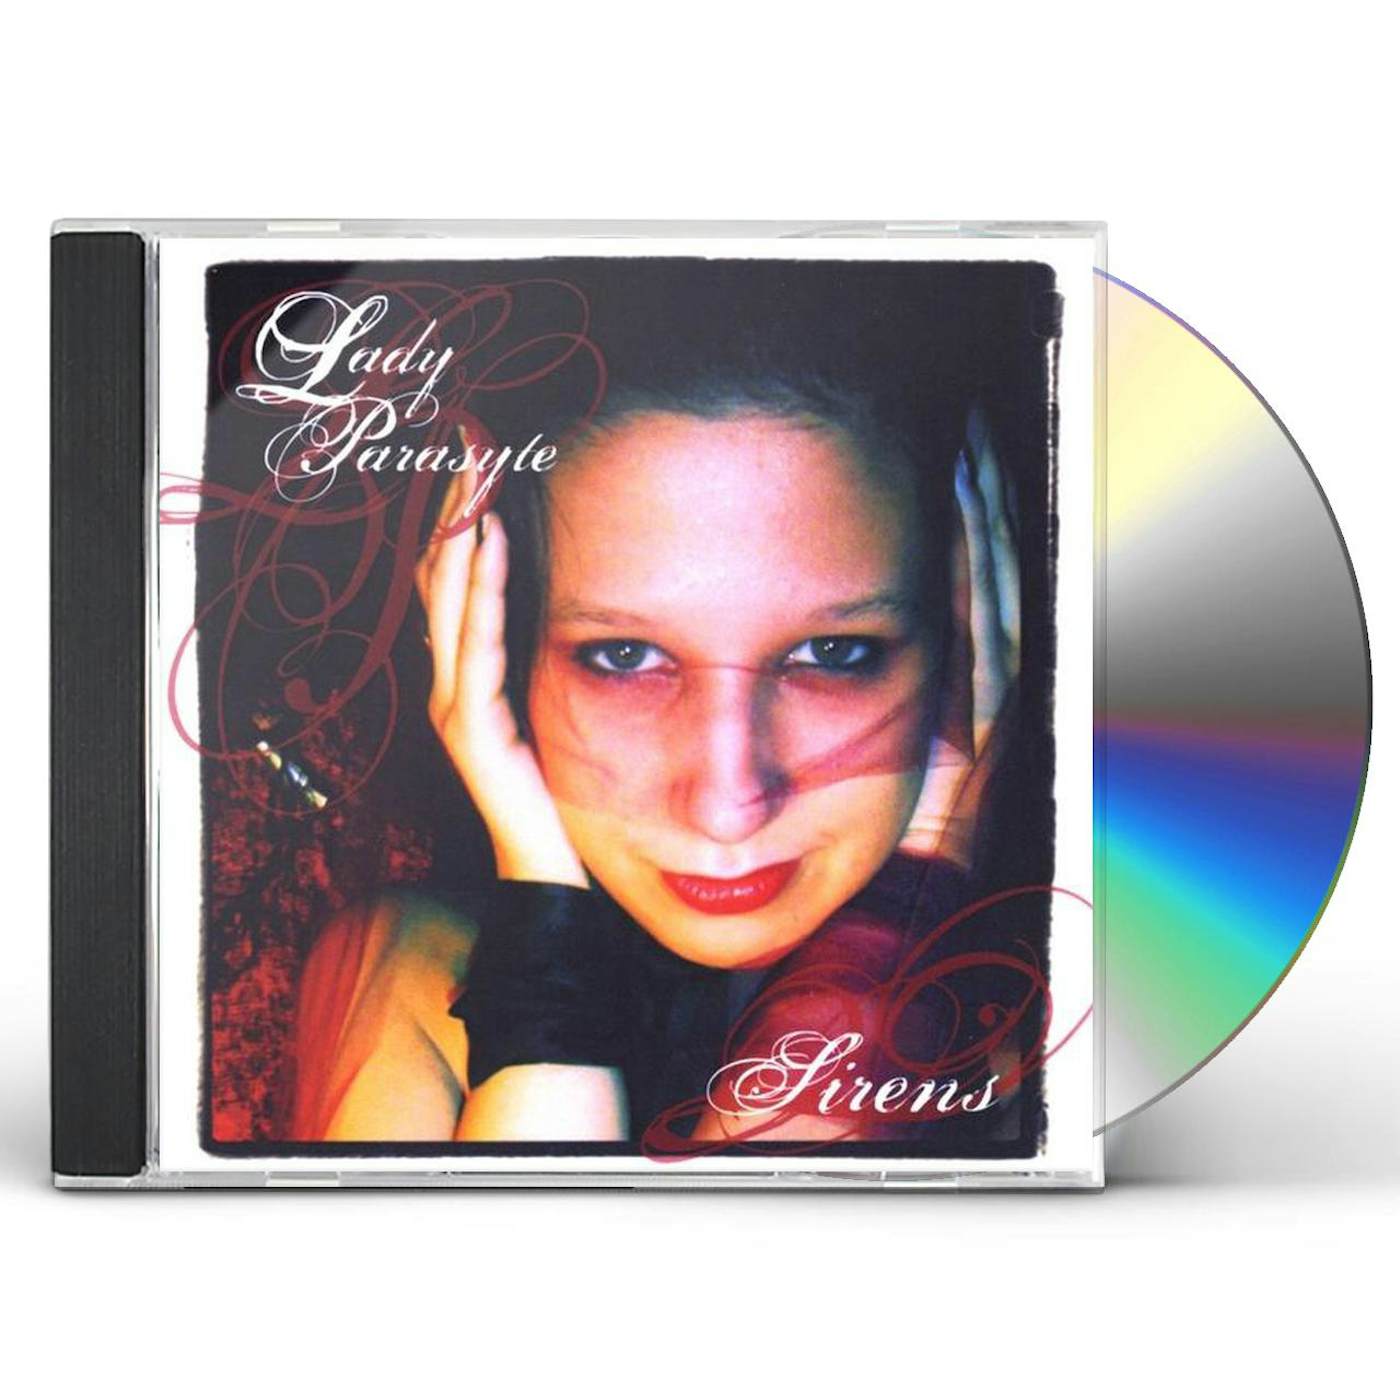 Lady Parasyte SIRENS CD